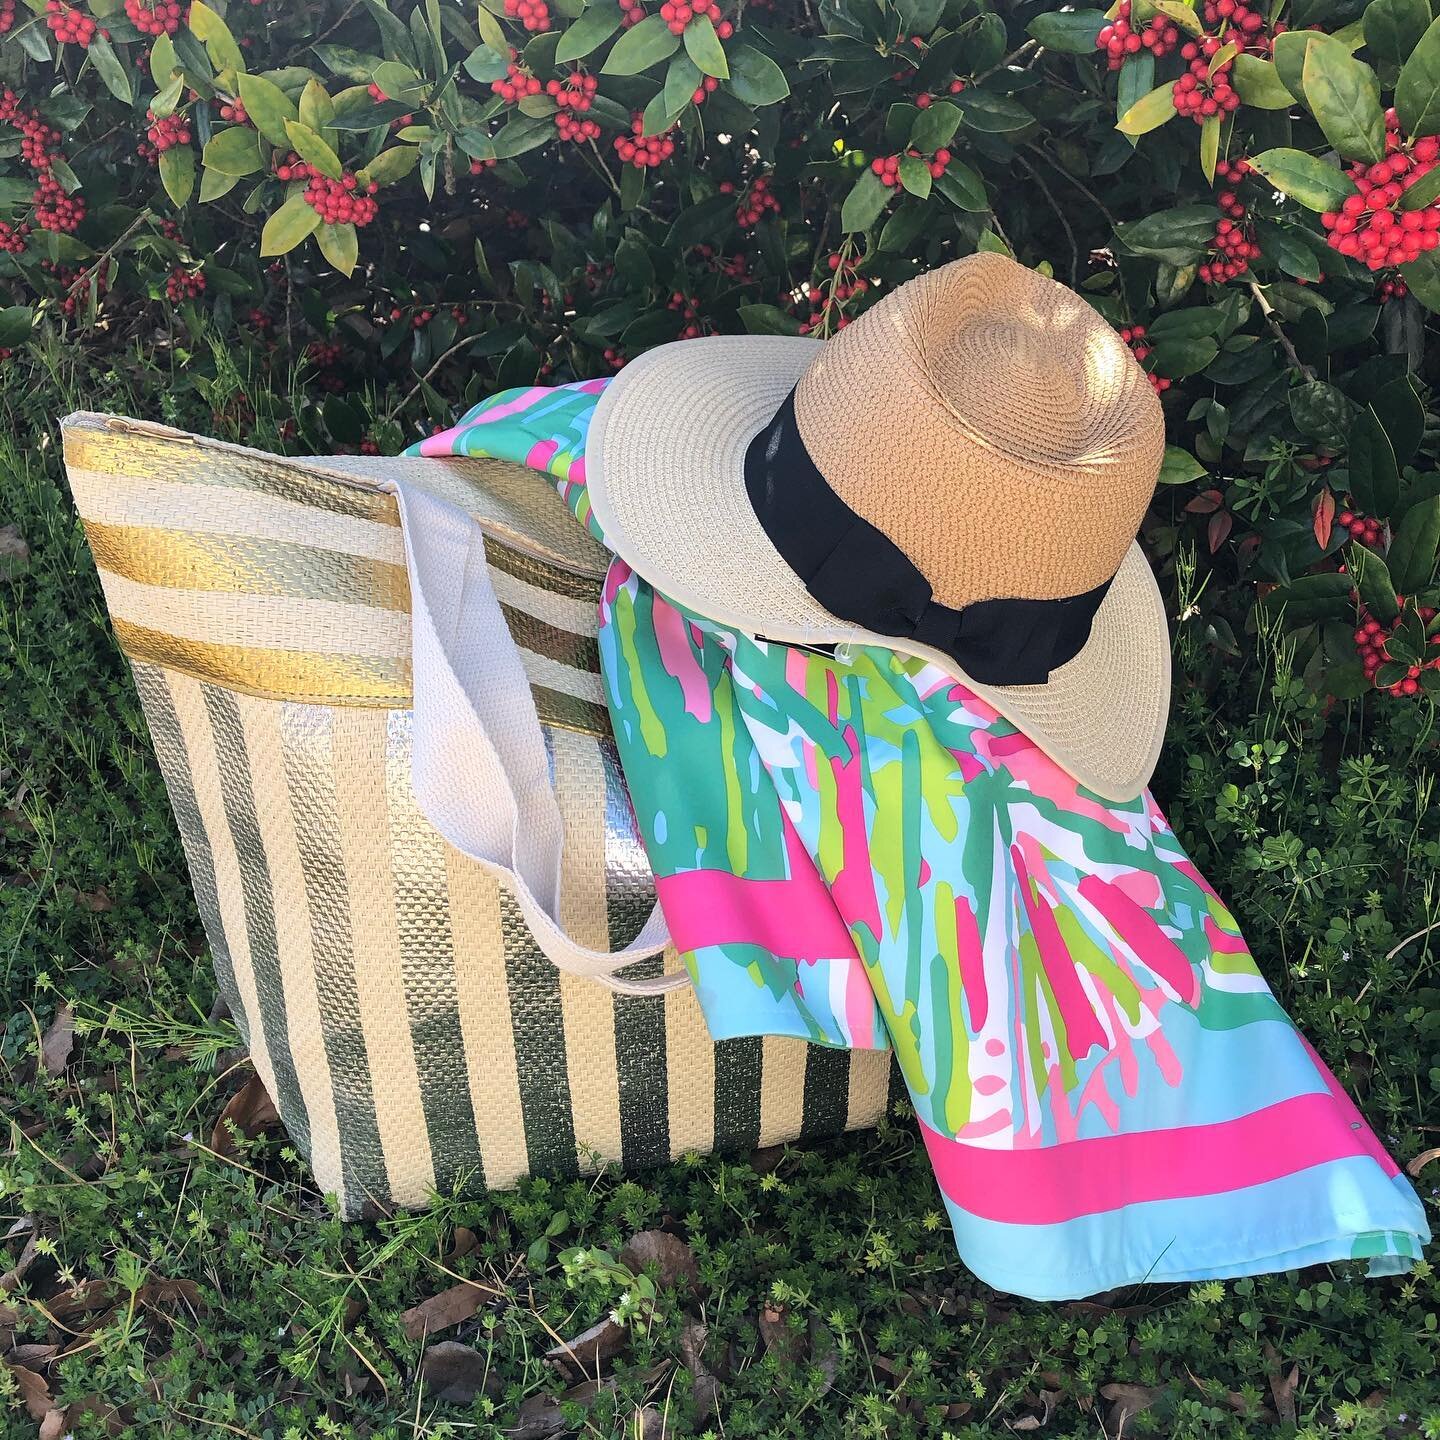 Put a little &ldquo;Zing&rdquo; into your Spring🌞
Beach Hats
Beach Totes 
Beach Cooler Bags
Beach Beaded Earrings 
Beach Towels
🦀🦀🦀